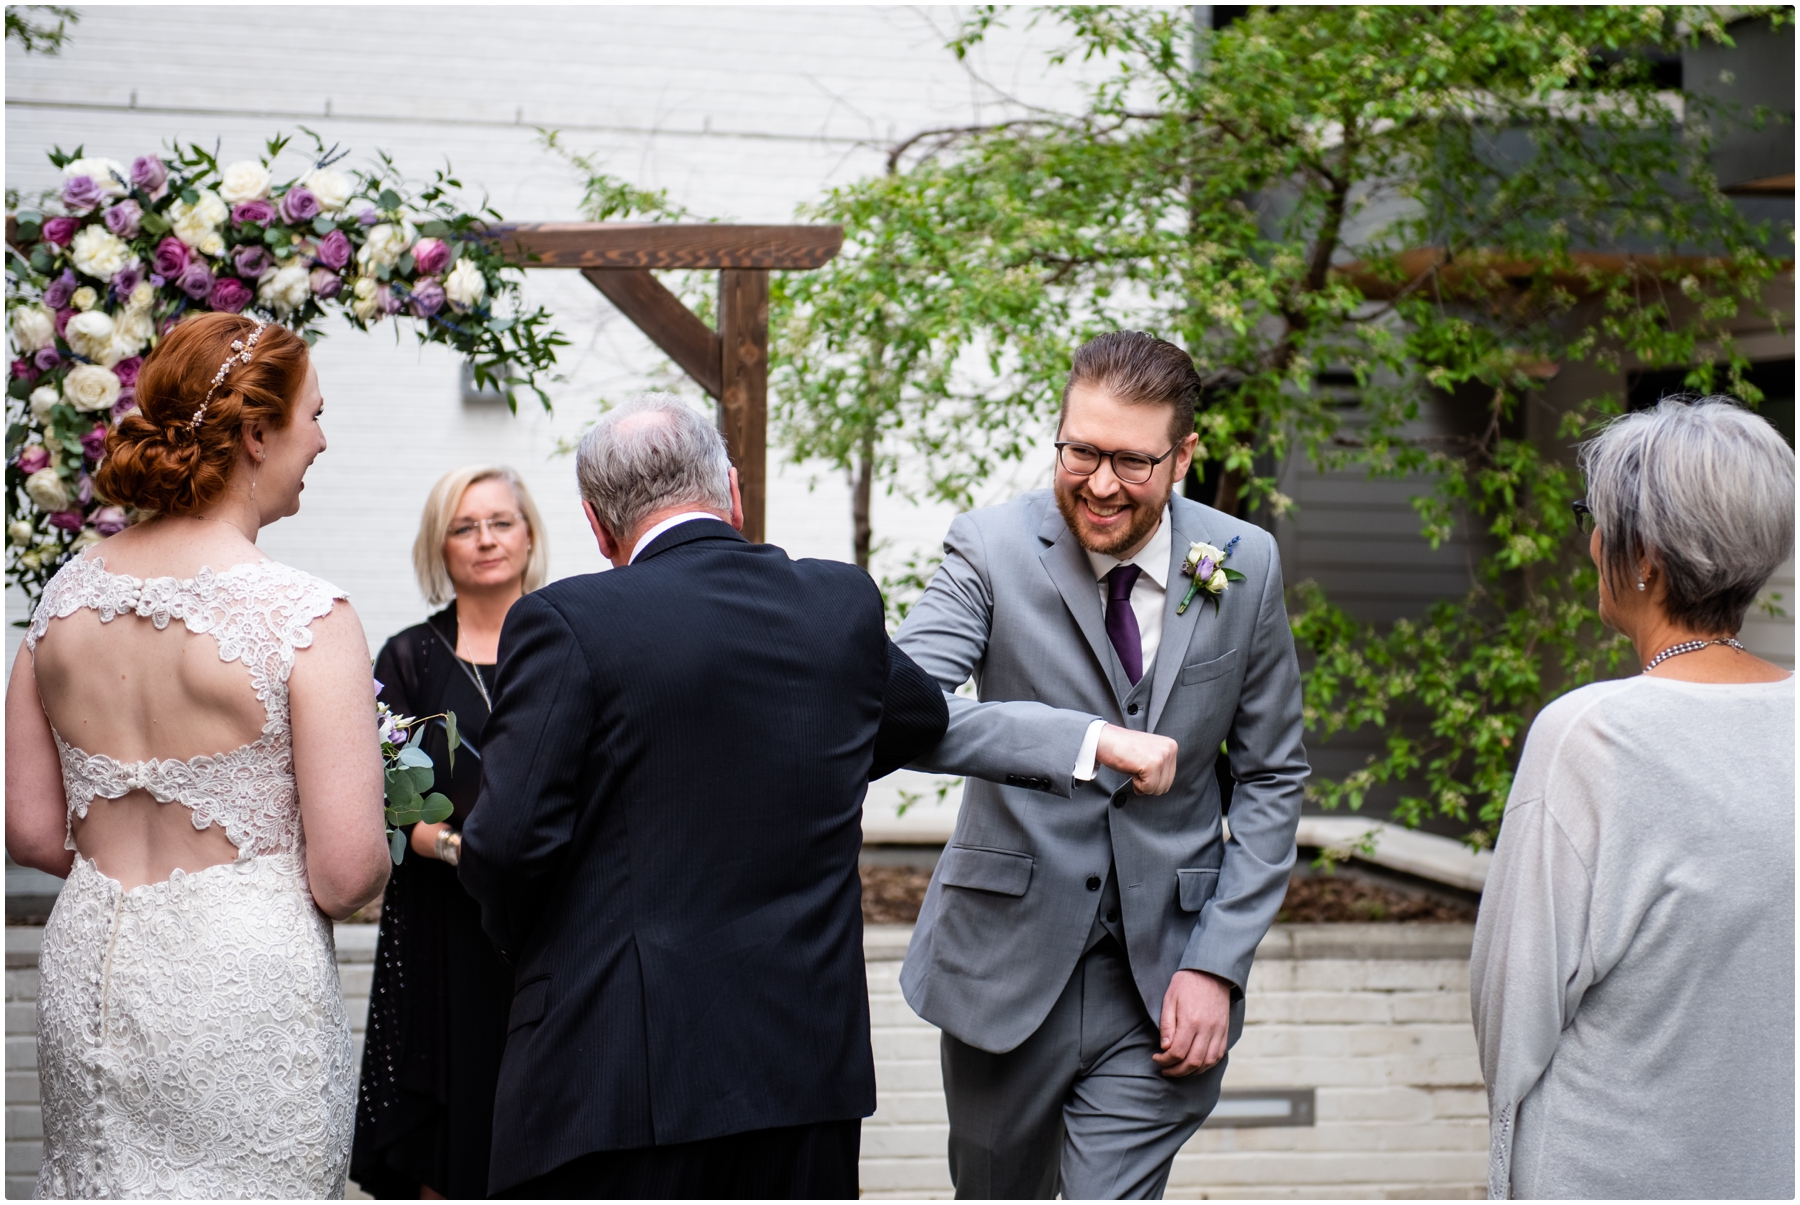 Intimate Wedding Ceremony Photos Calgary